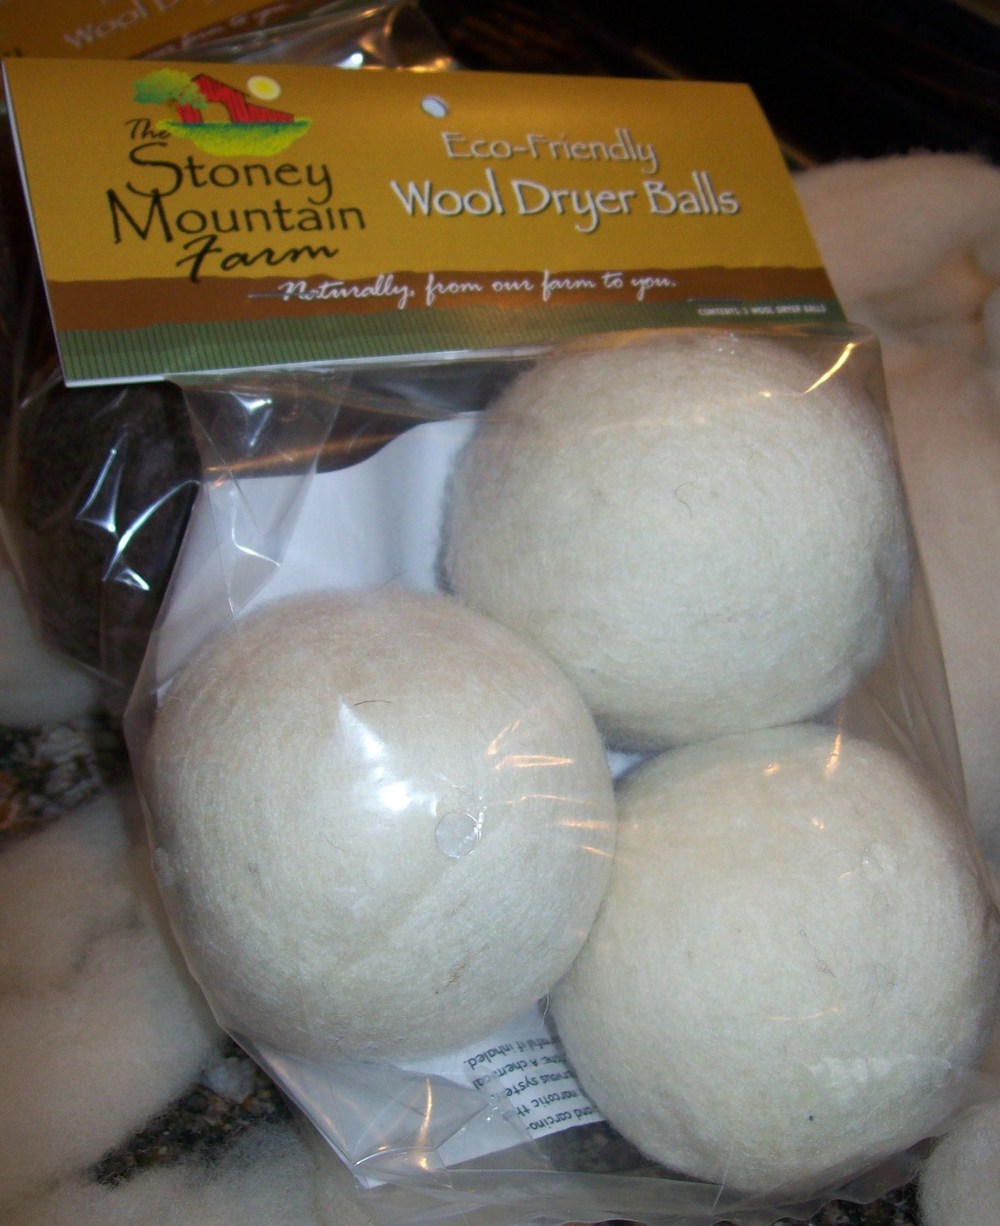 Stoney Mountain Farm Eco-Friendly Wool Dryer Balls